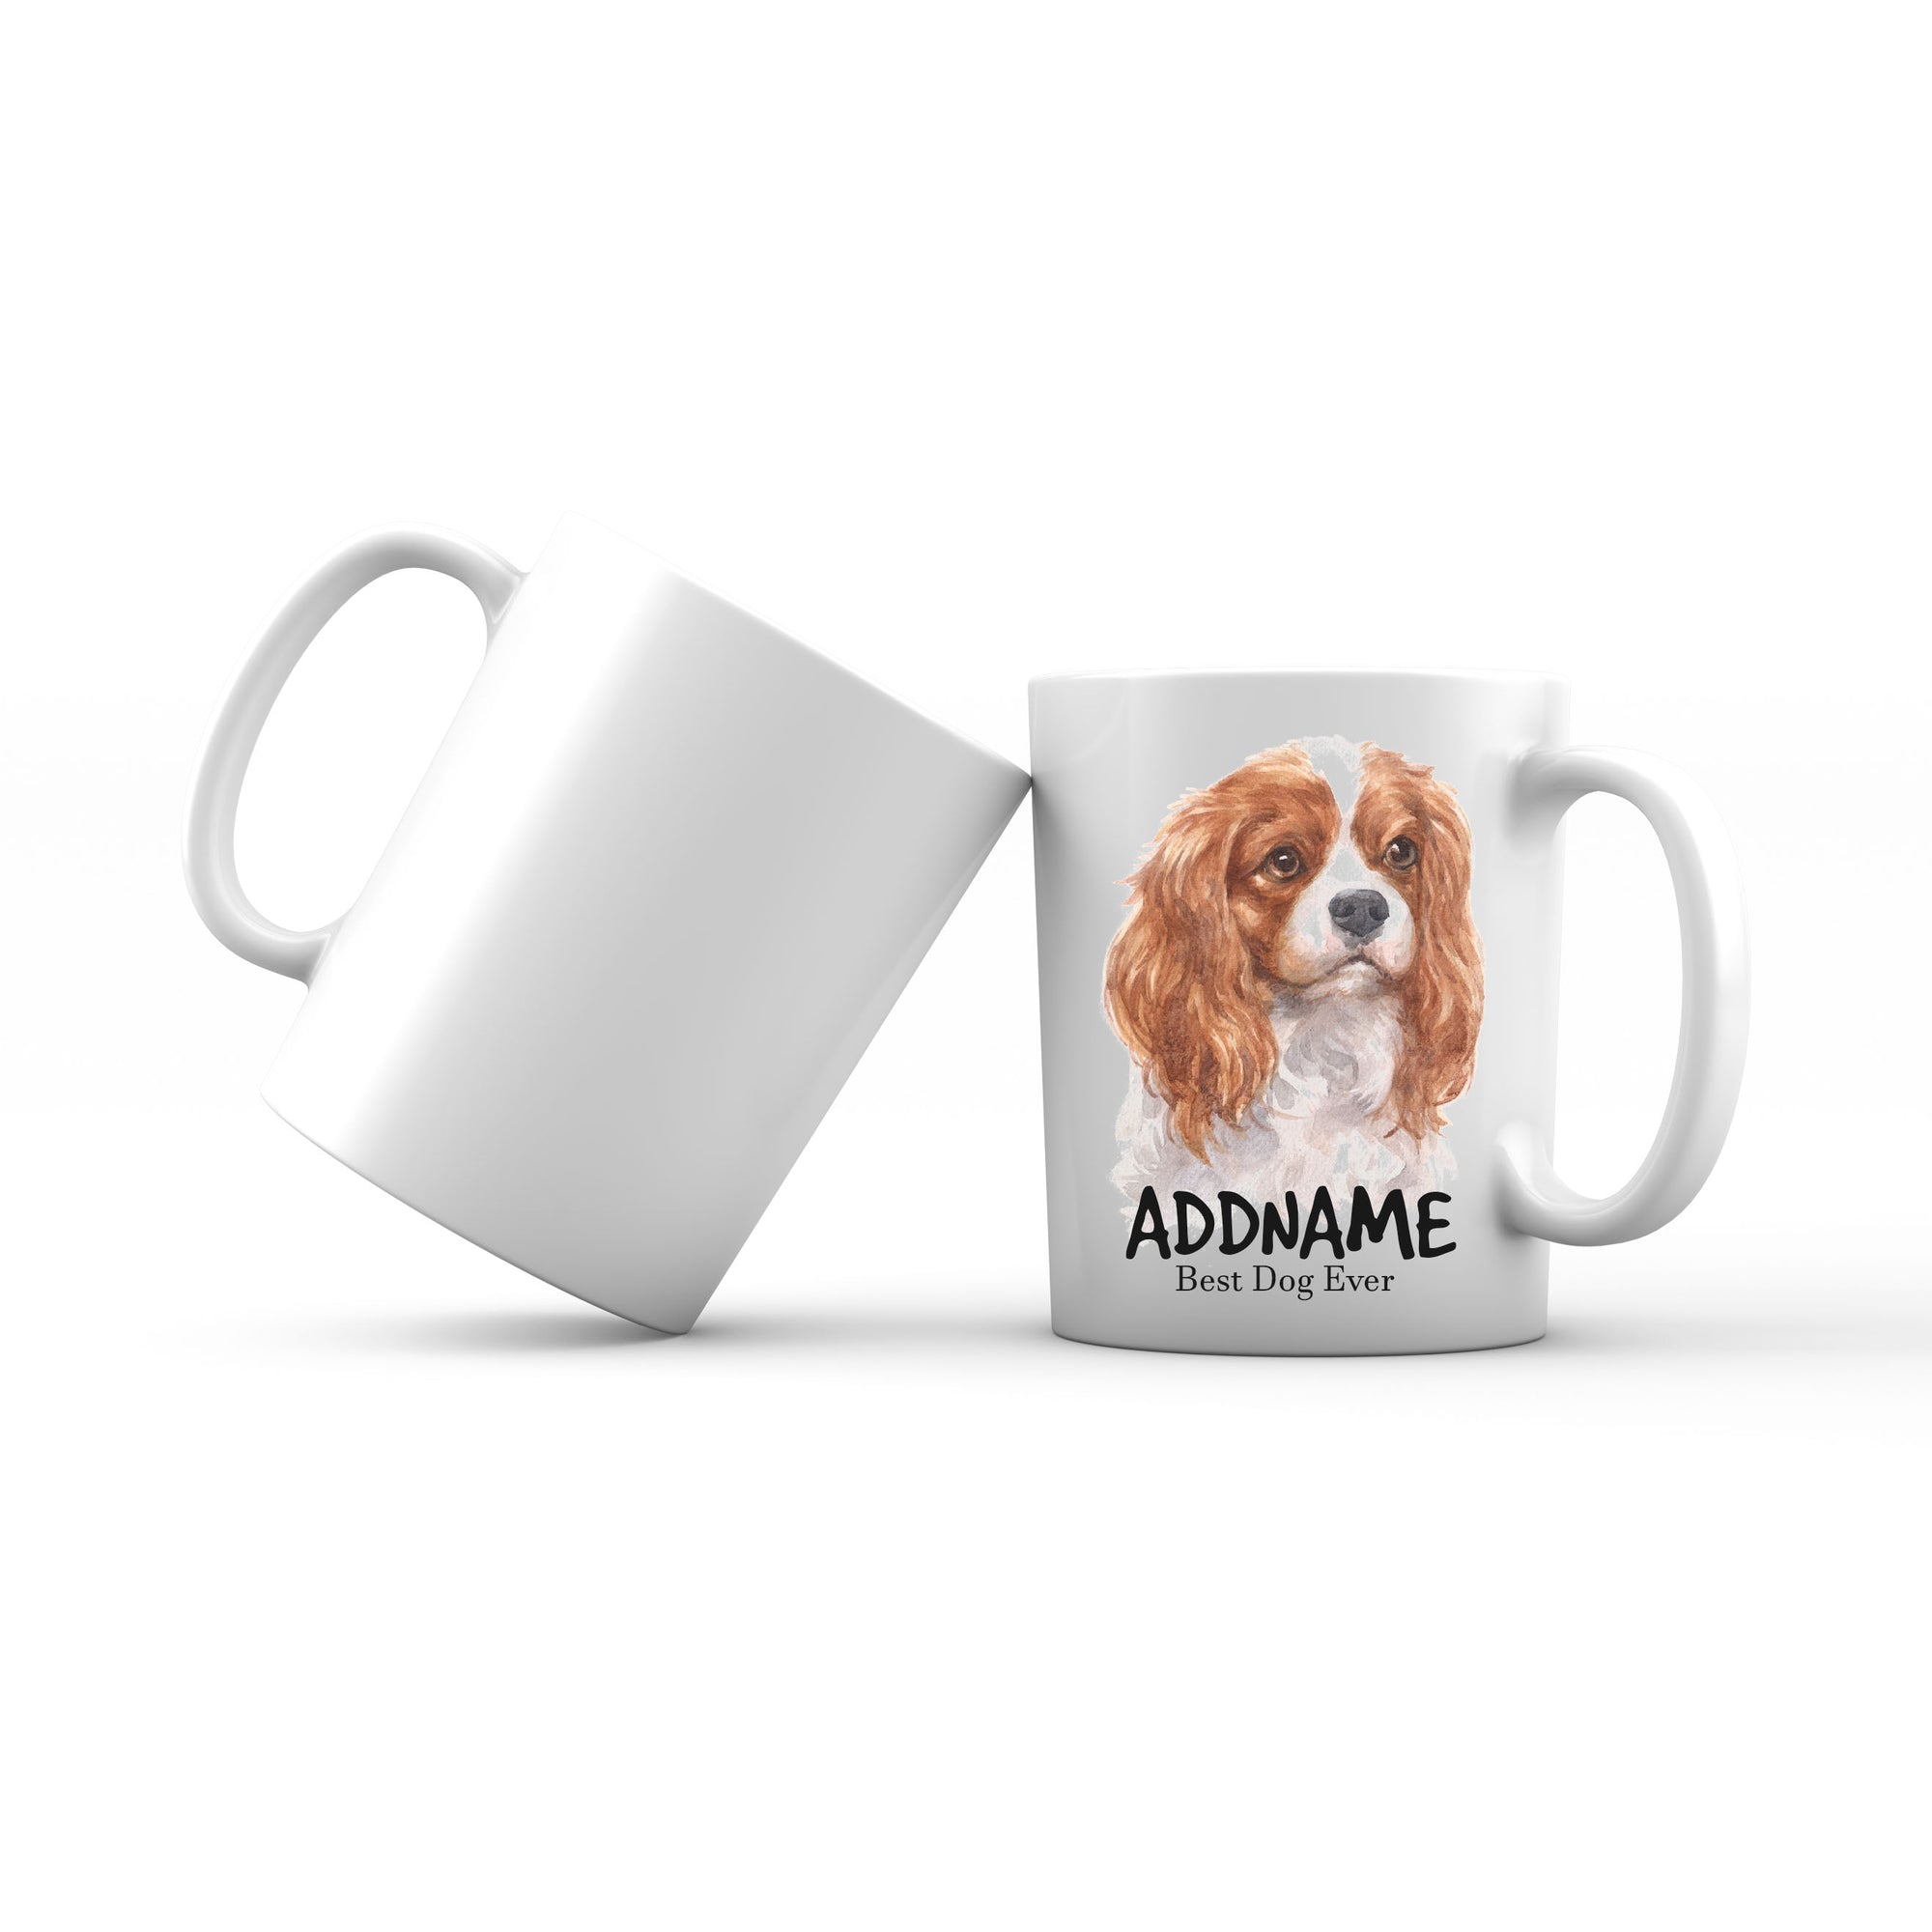 Watercolor Dog King Charles Spaniel Curly Best Dog Ever Addname Mug